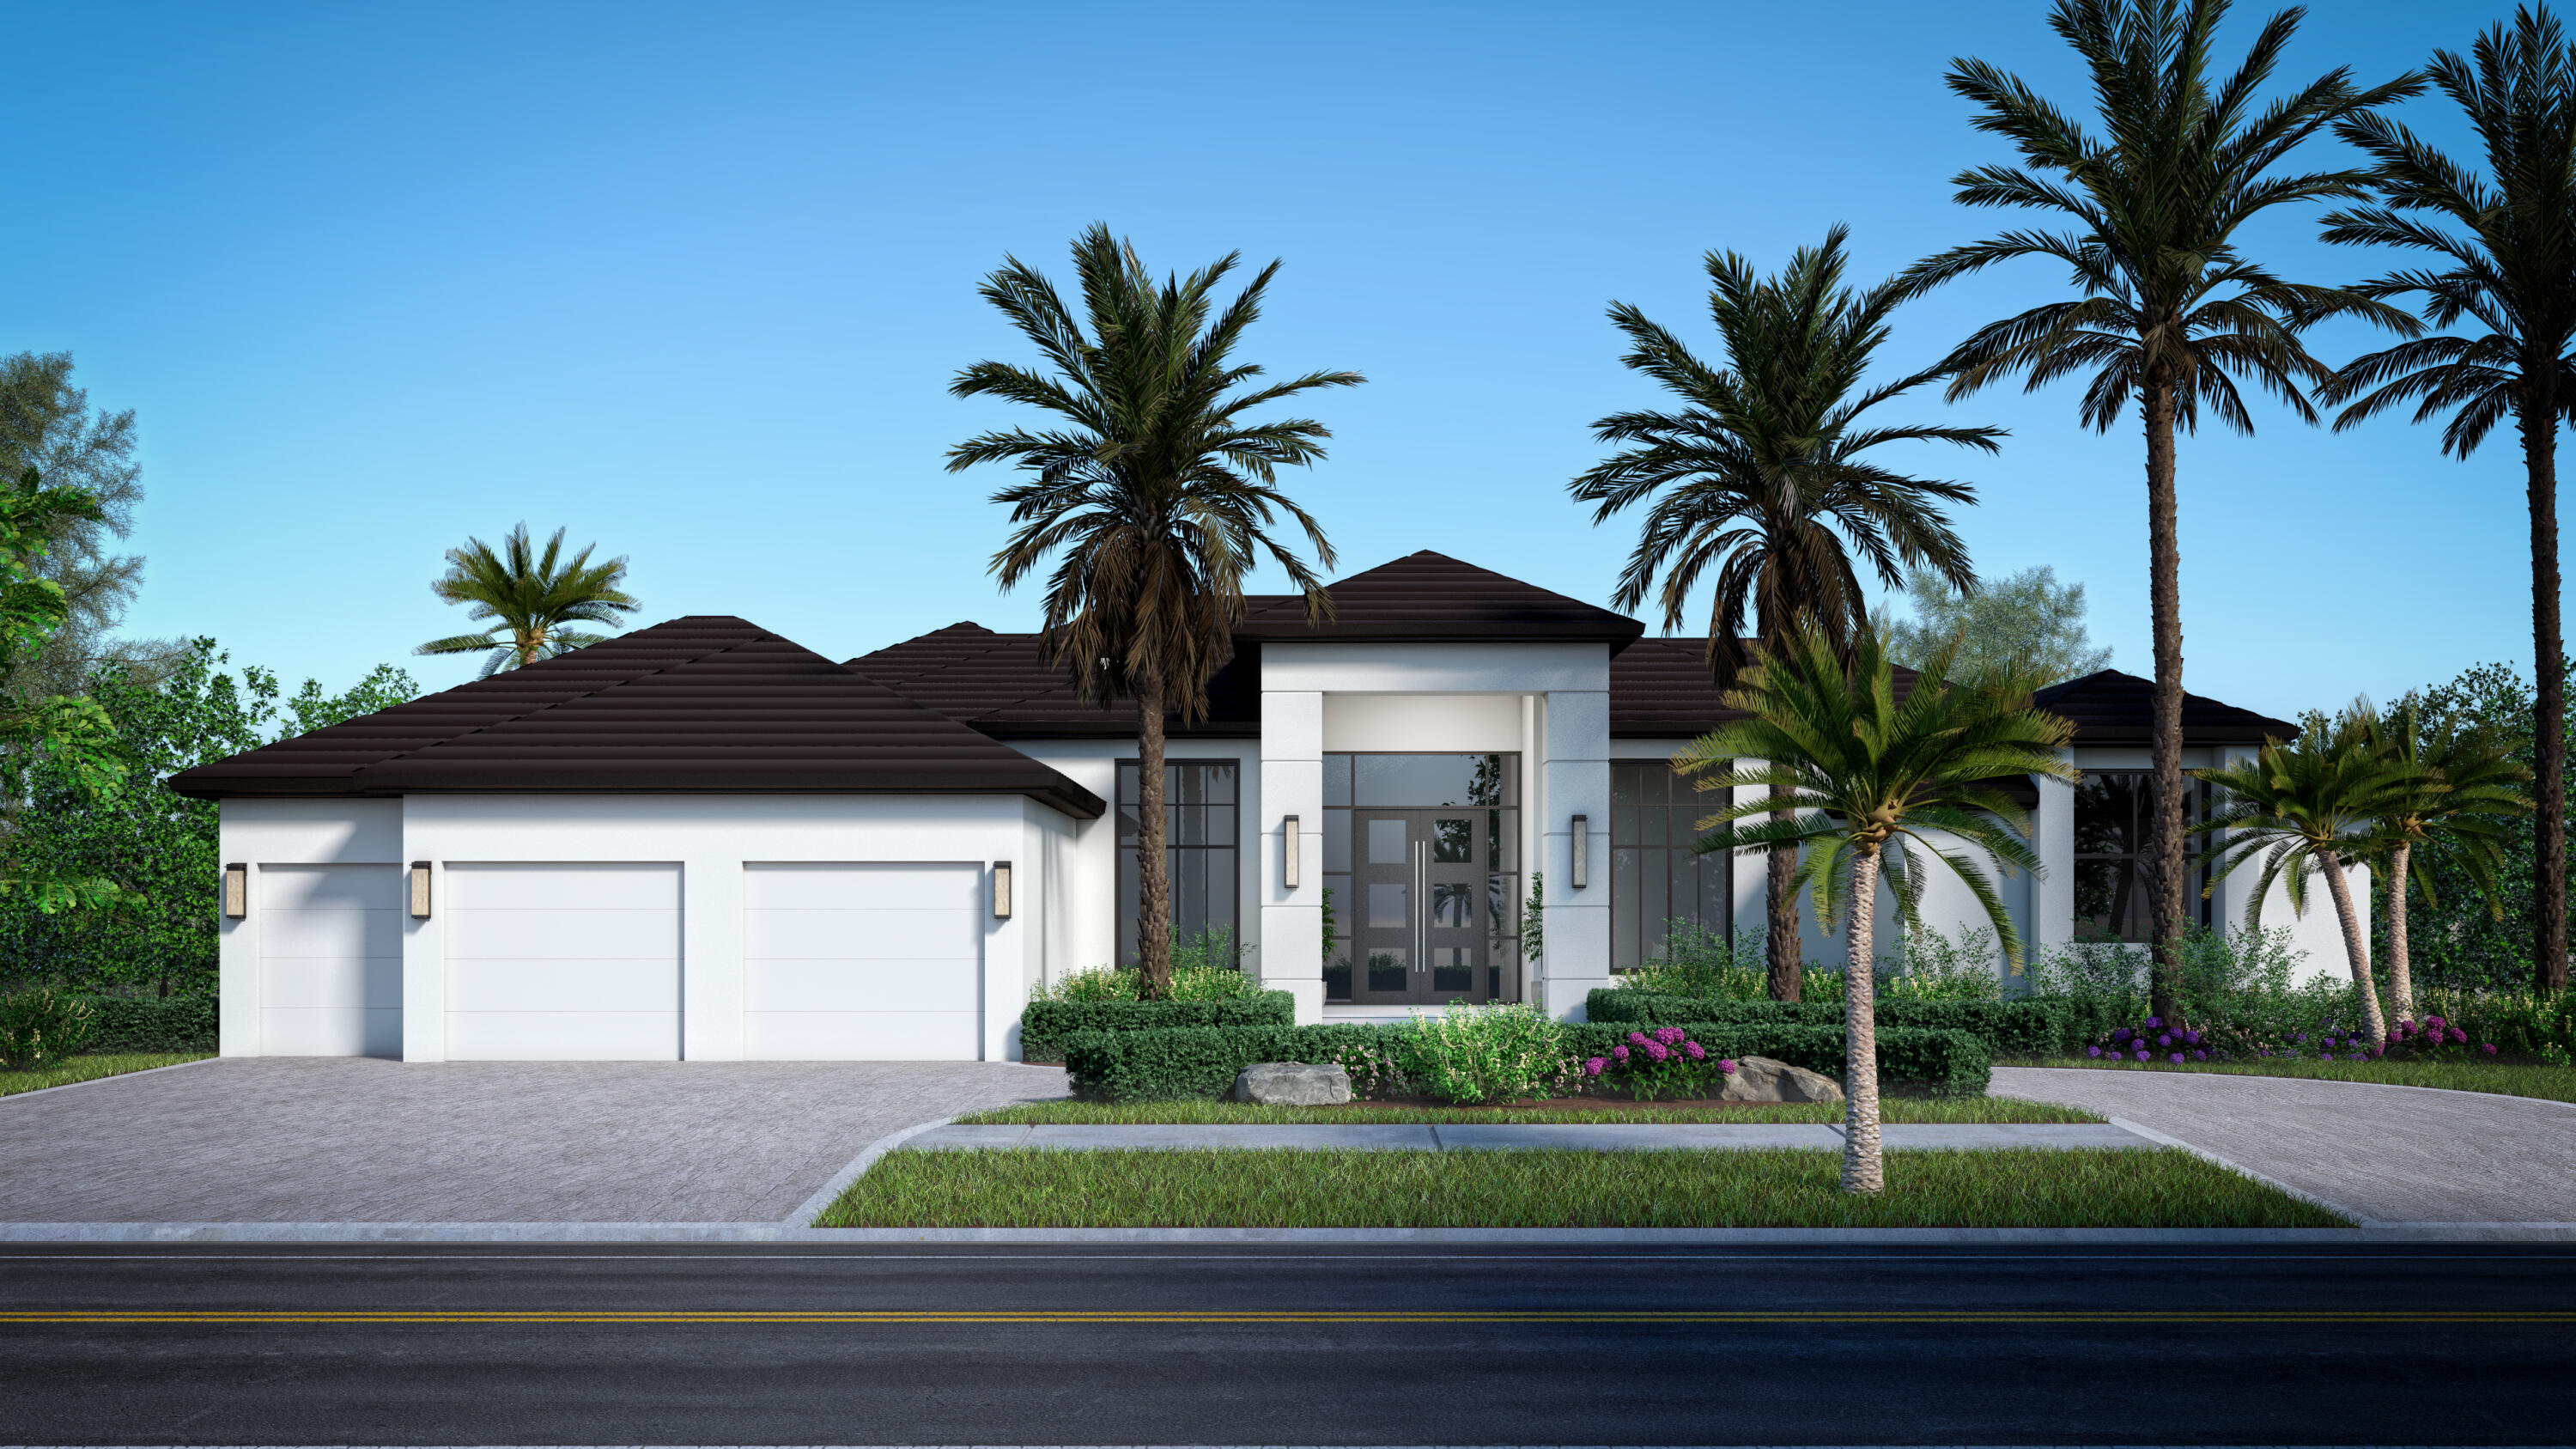 Property for Sale at 4875 Tallowwood Lane, Boca Raton, Palm Beach County, Florida - Bedrooms: 4 
Bathrooms: 4.5  - $2,995,000